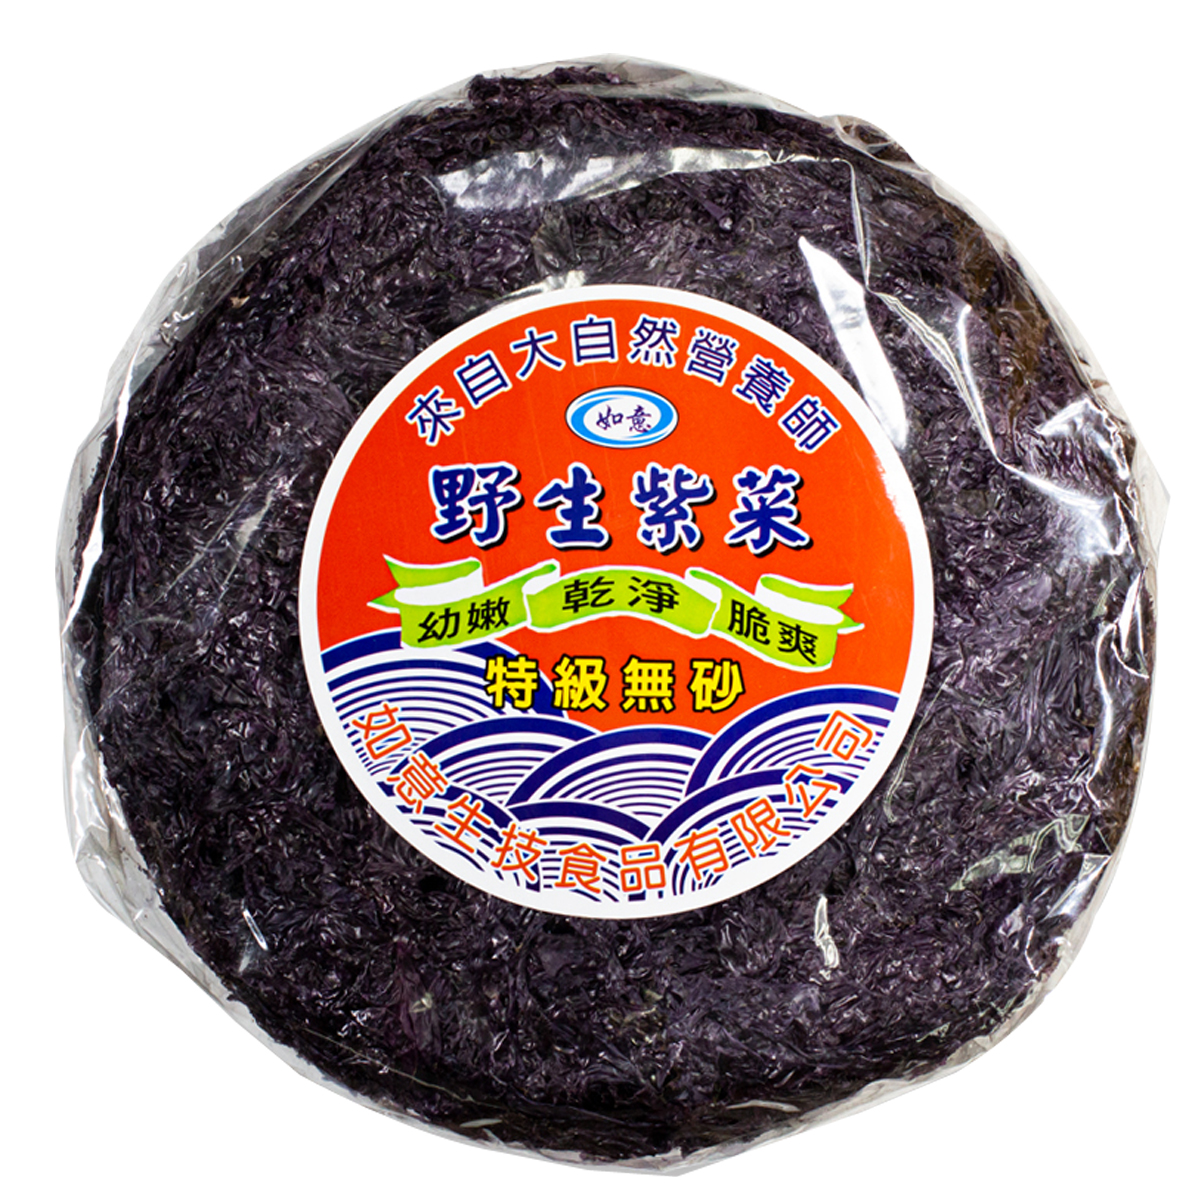 Image Seaweed (no sand) 如意-野生紫菜餅 110grams